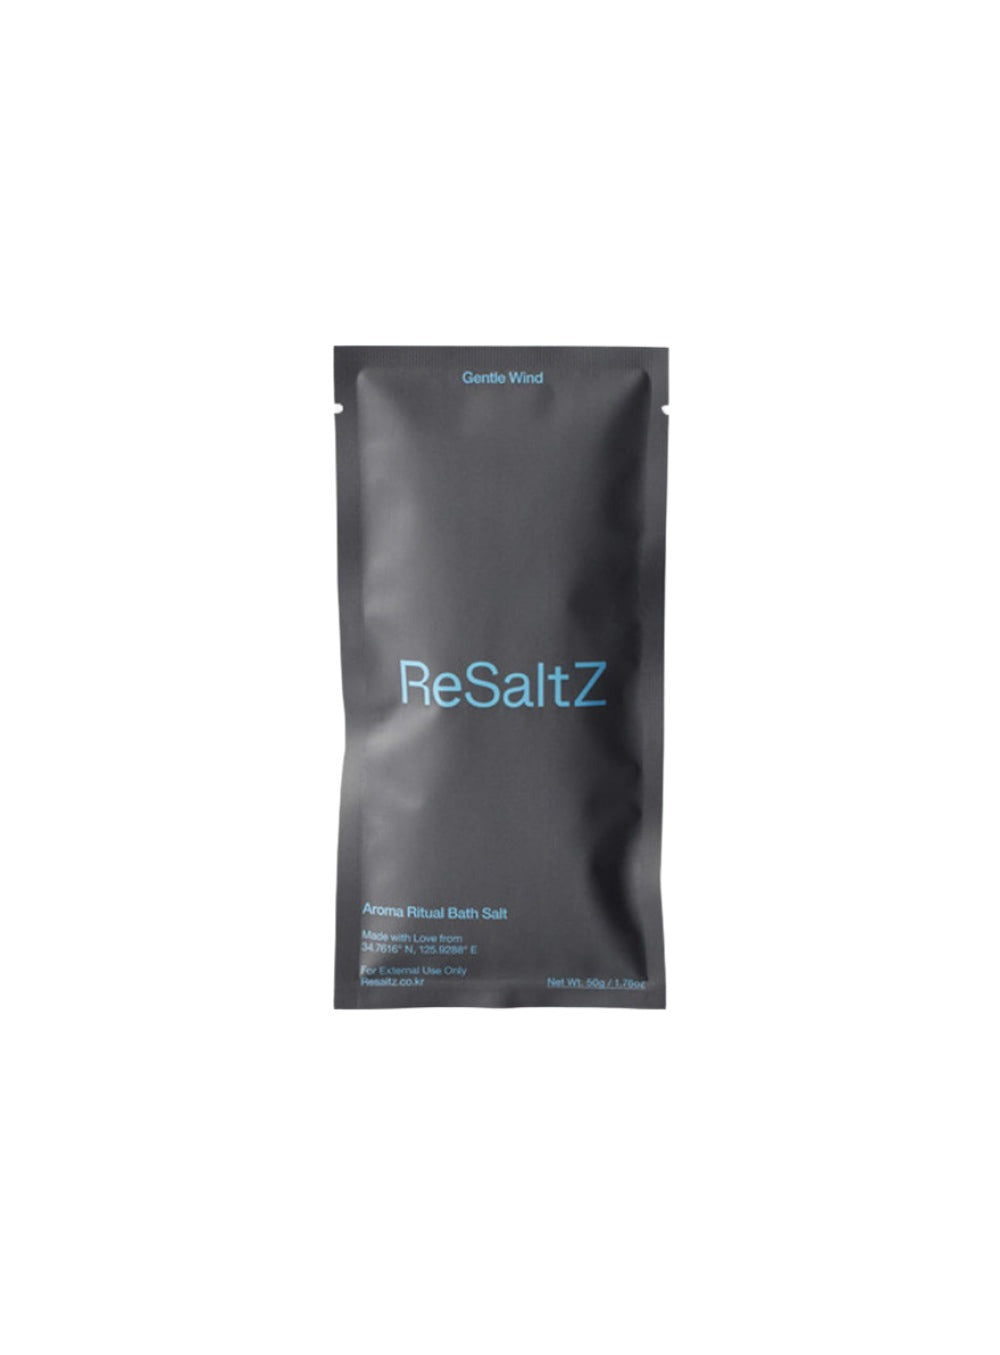 ReSaltZ Aroma Bath Salt Ocean Musk